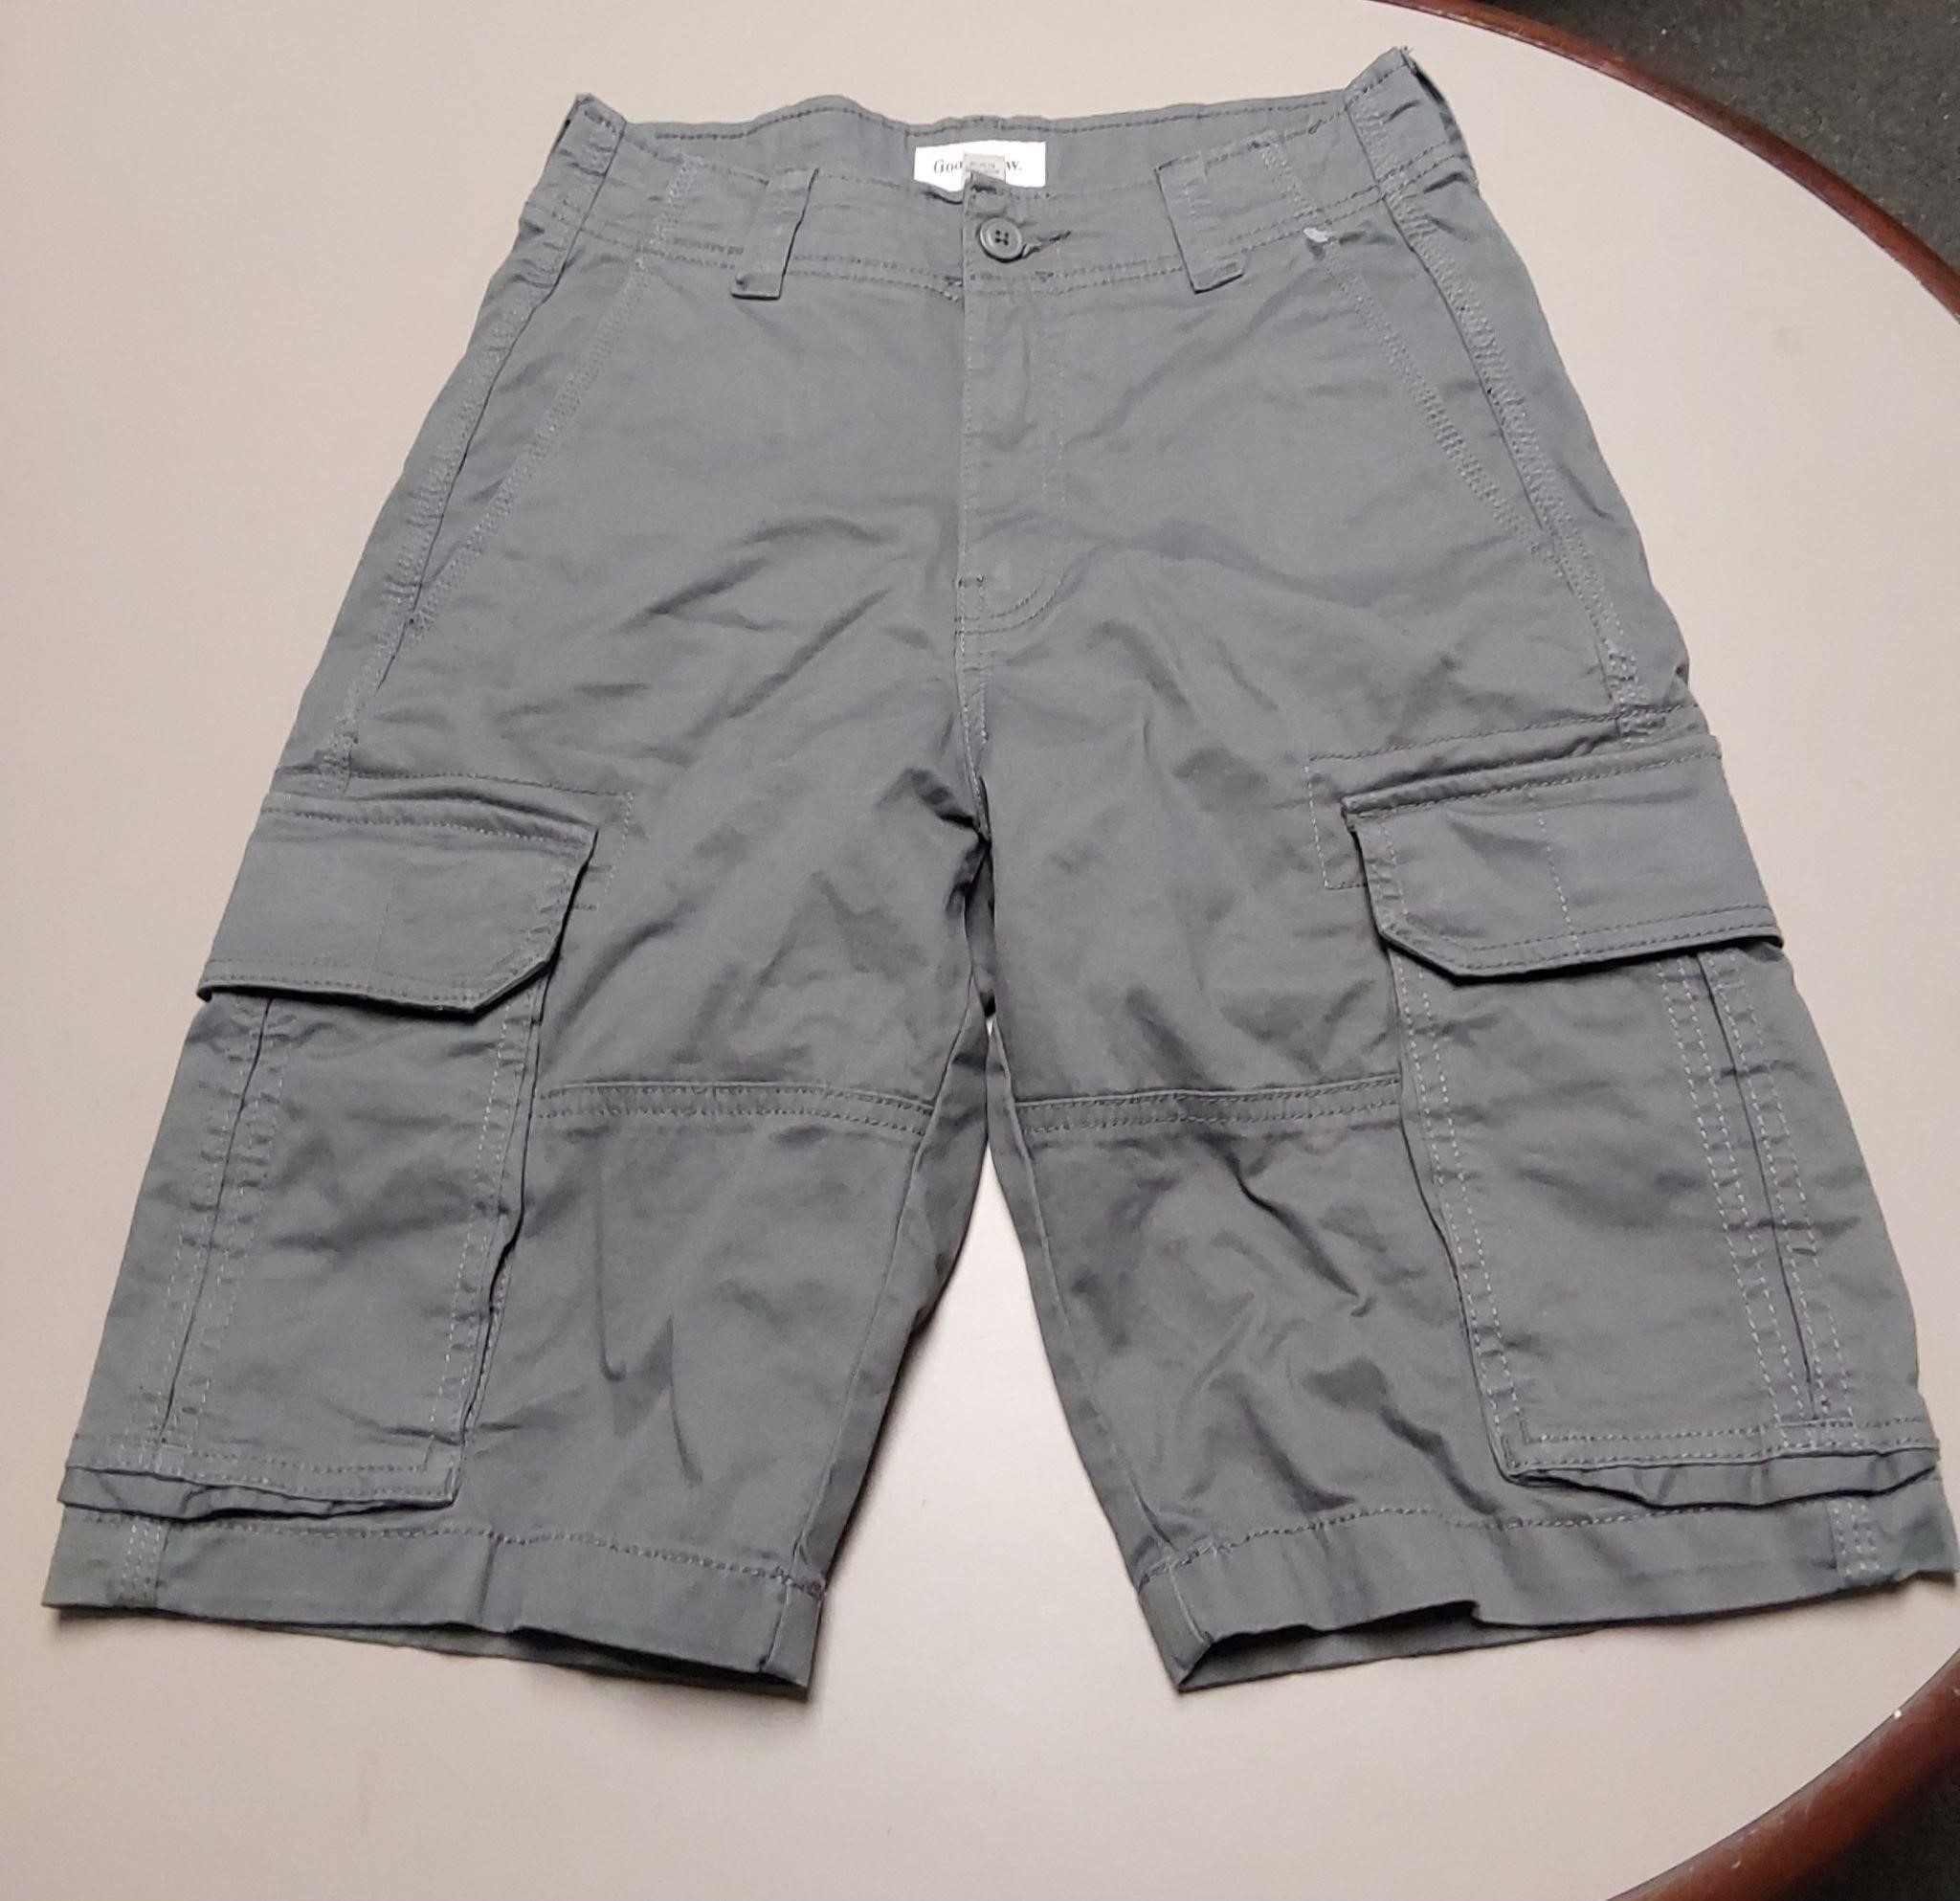 Goodfellow Size 28 Cargo Shorts